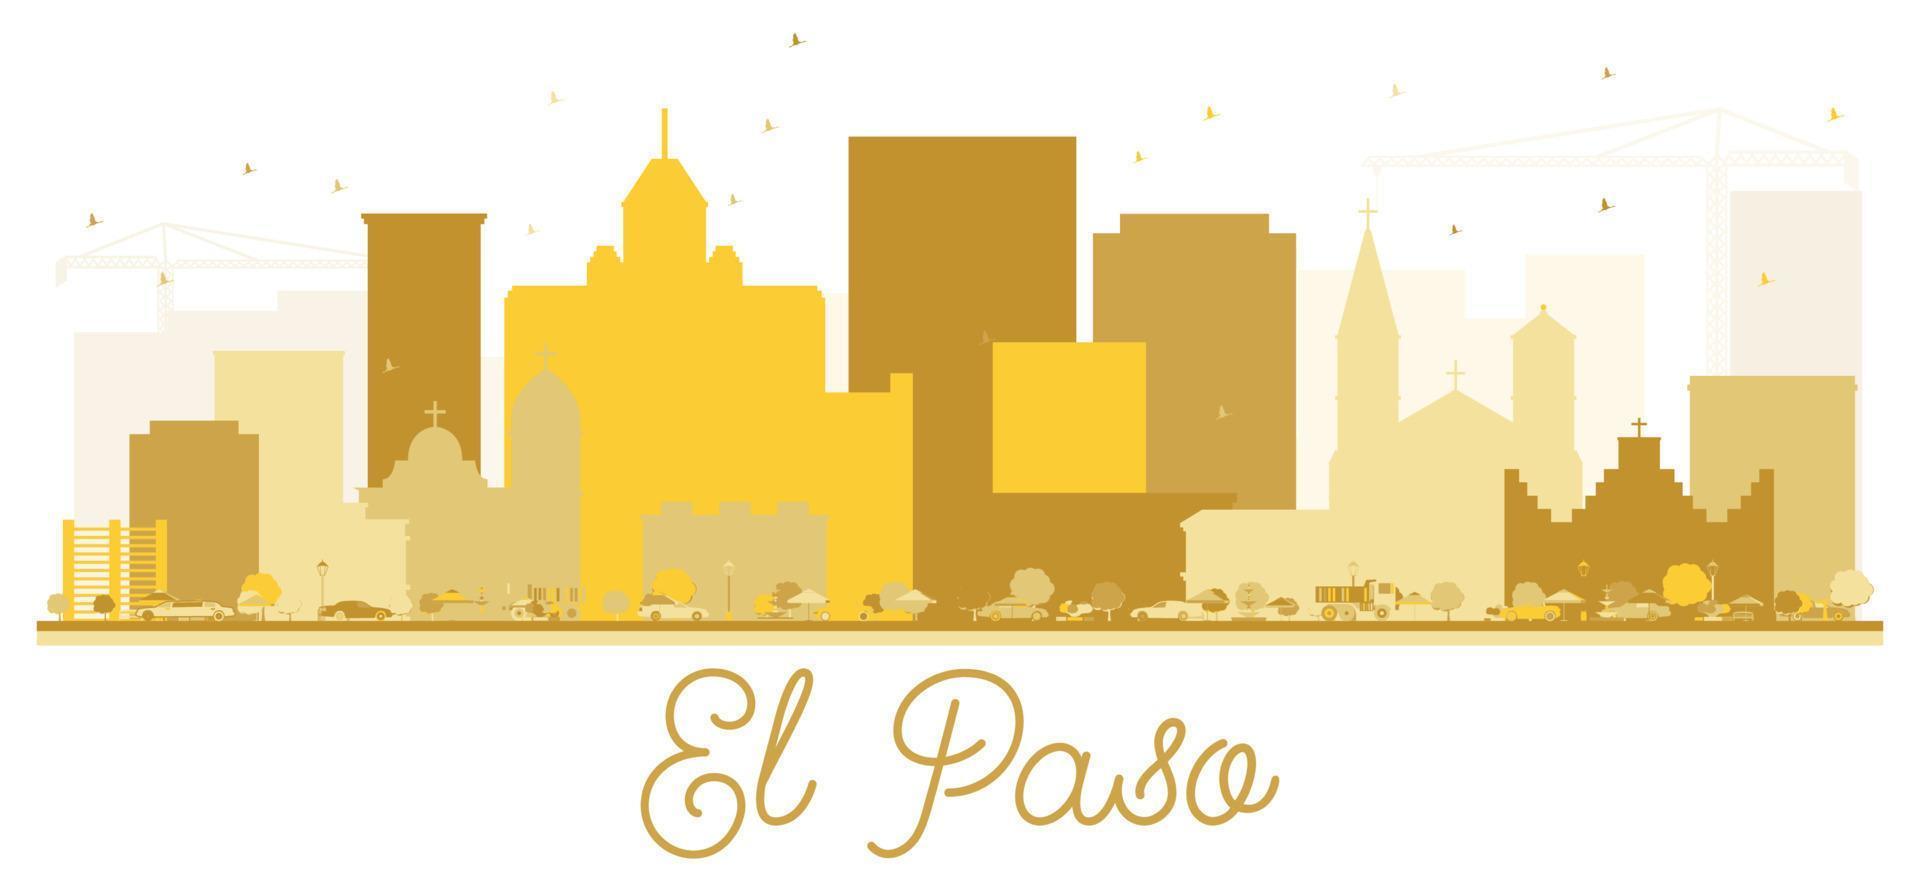 el paso texas usa city skyline silueta dorada. vector